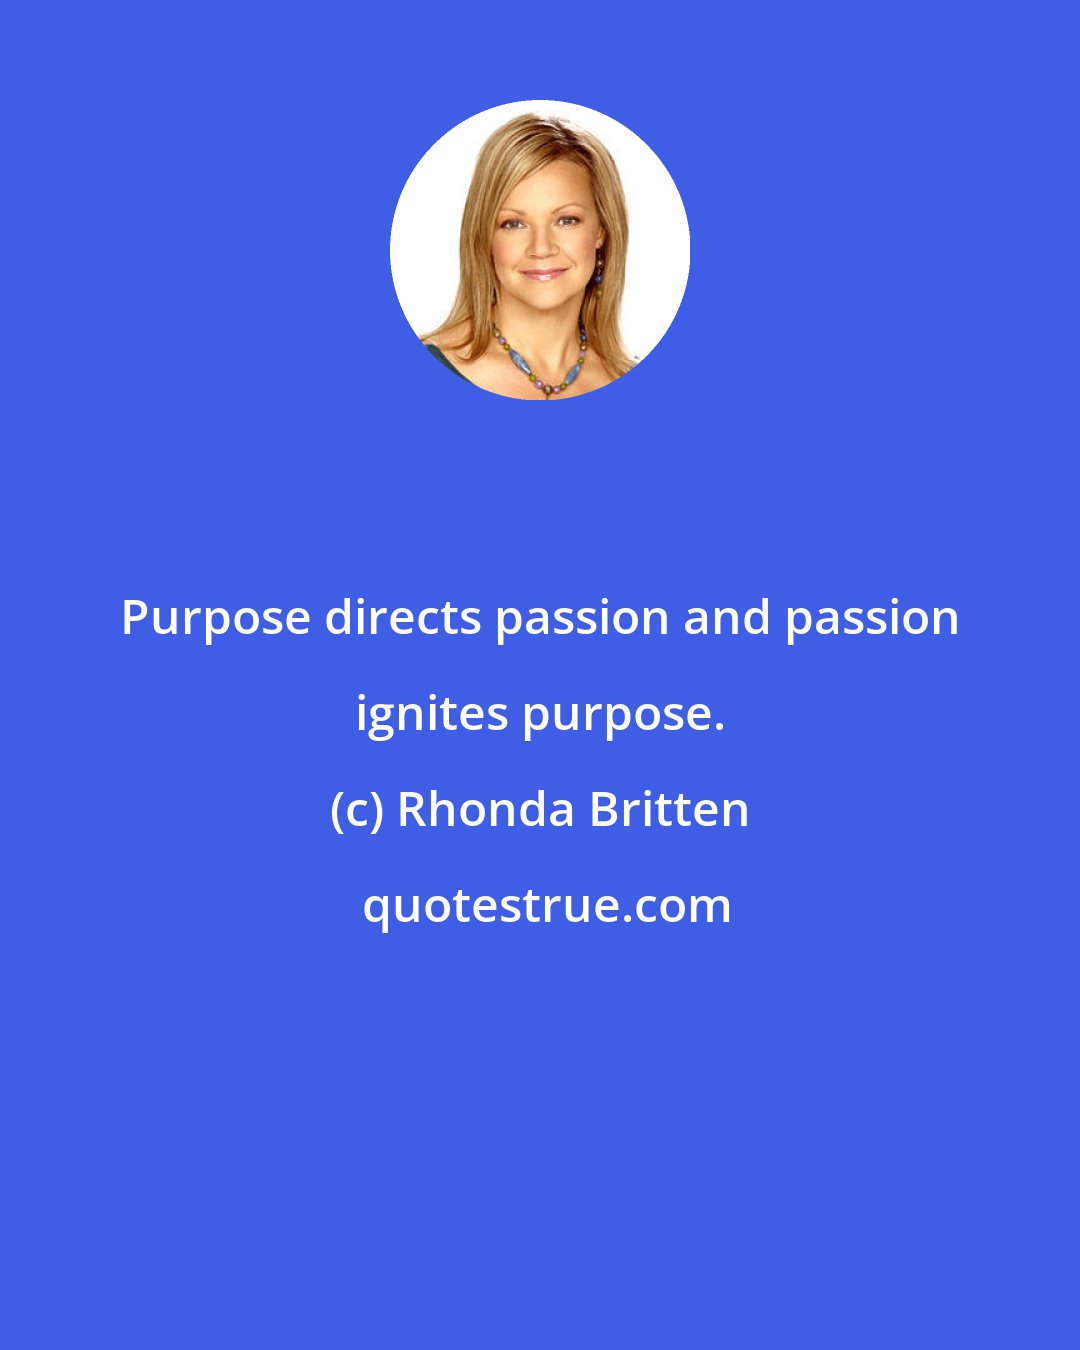 Rhonda Britten: Purpose directs passion and passion ignites purpose.